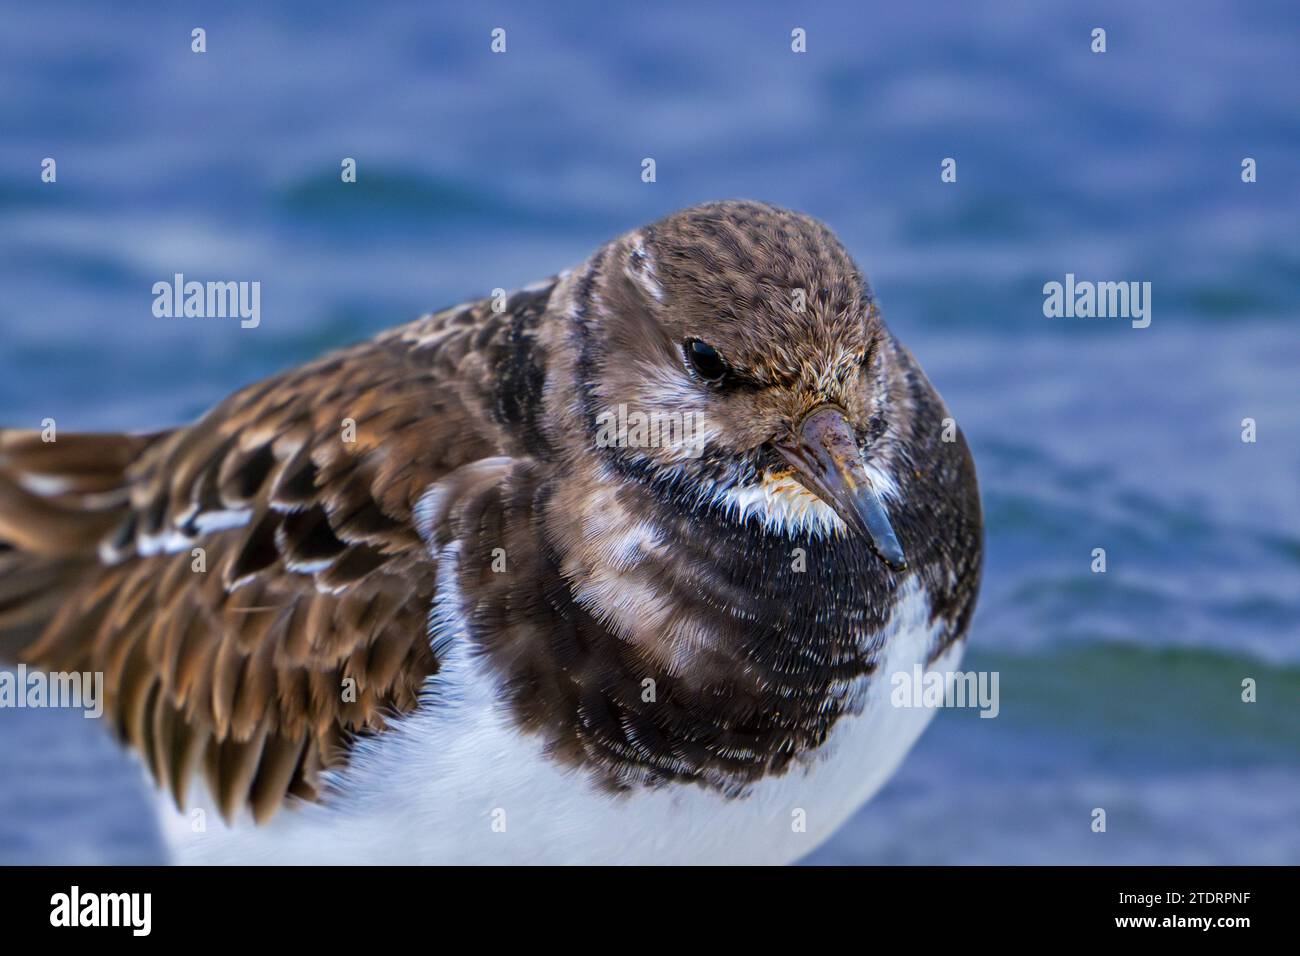 Ruddy turnstone (Arenaria interprets) en plumage non reproductif reposant sur la roche le long de la côte de la mer du Nord en hiver Banque D'Images